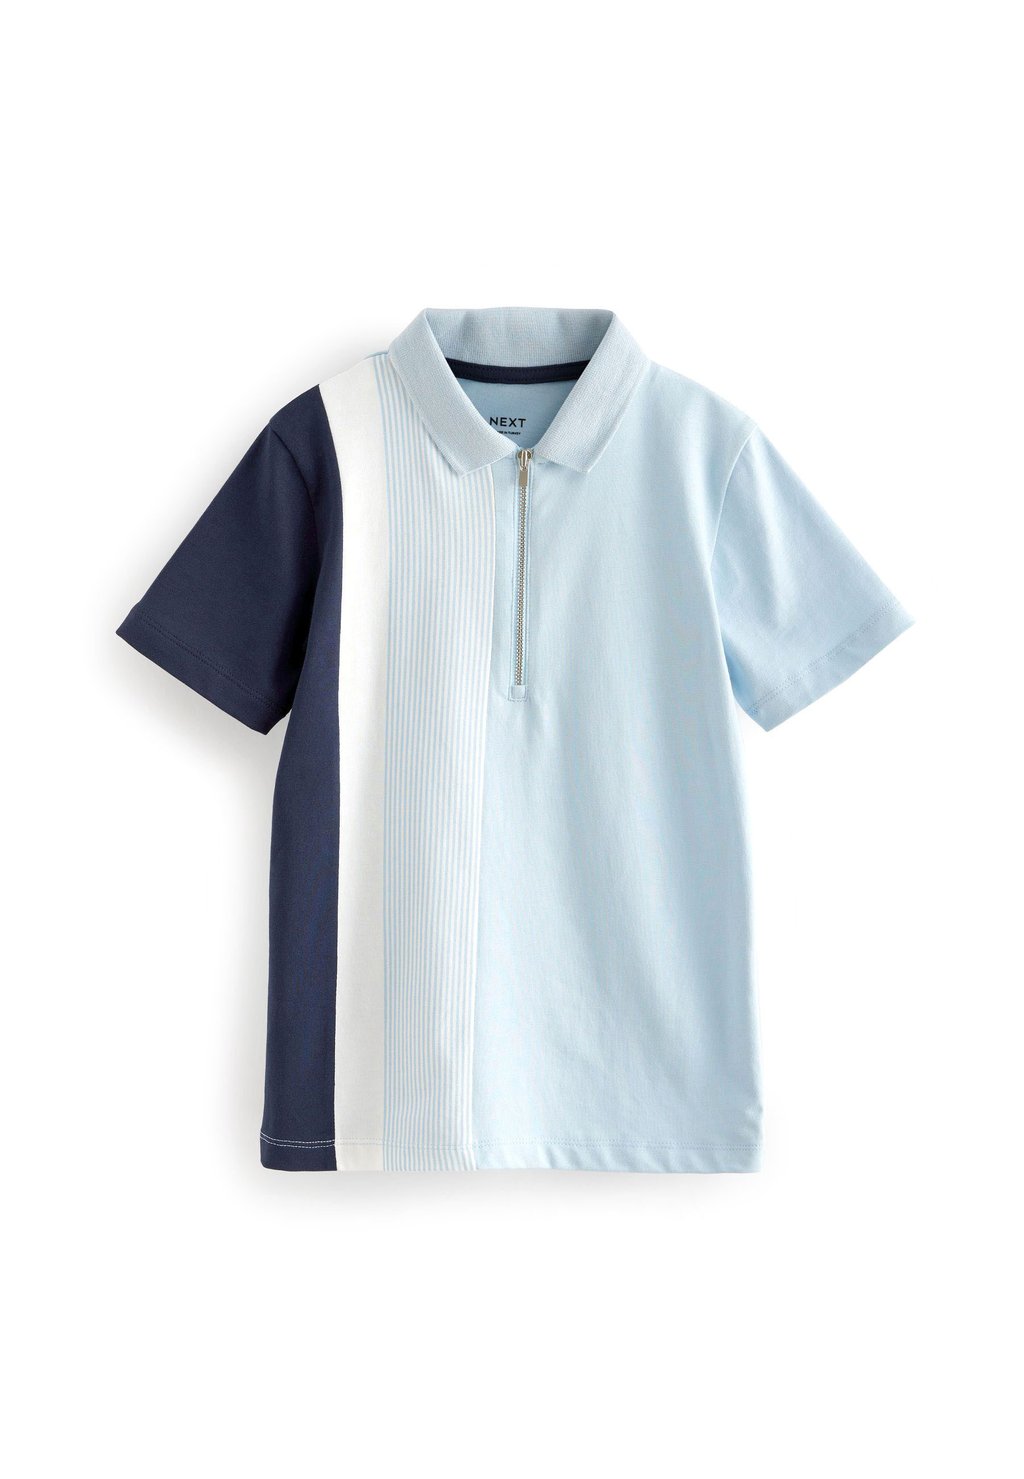 Рубашка-поло SHORT SLEEVE 3-16YRS Next, цвет light blue navy vertical panel